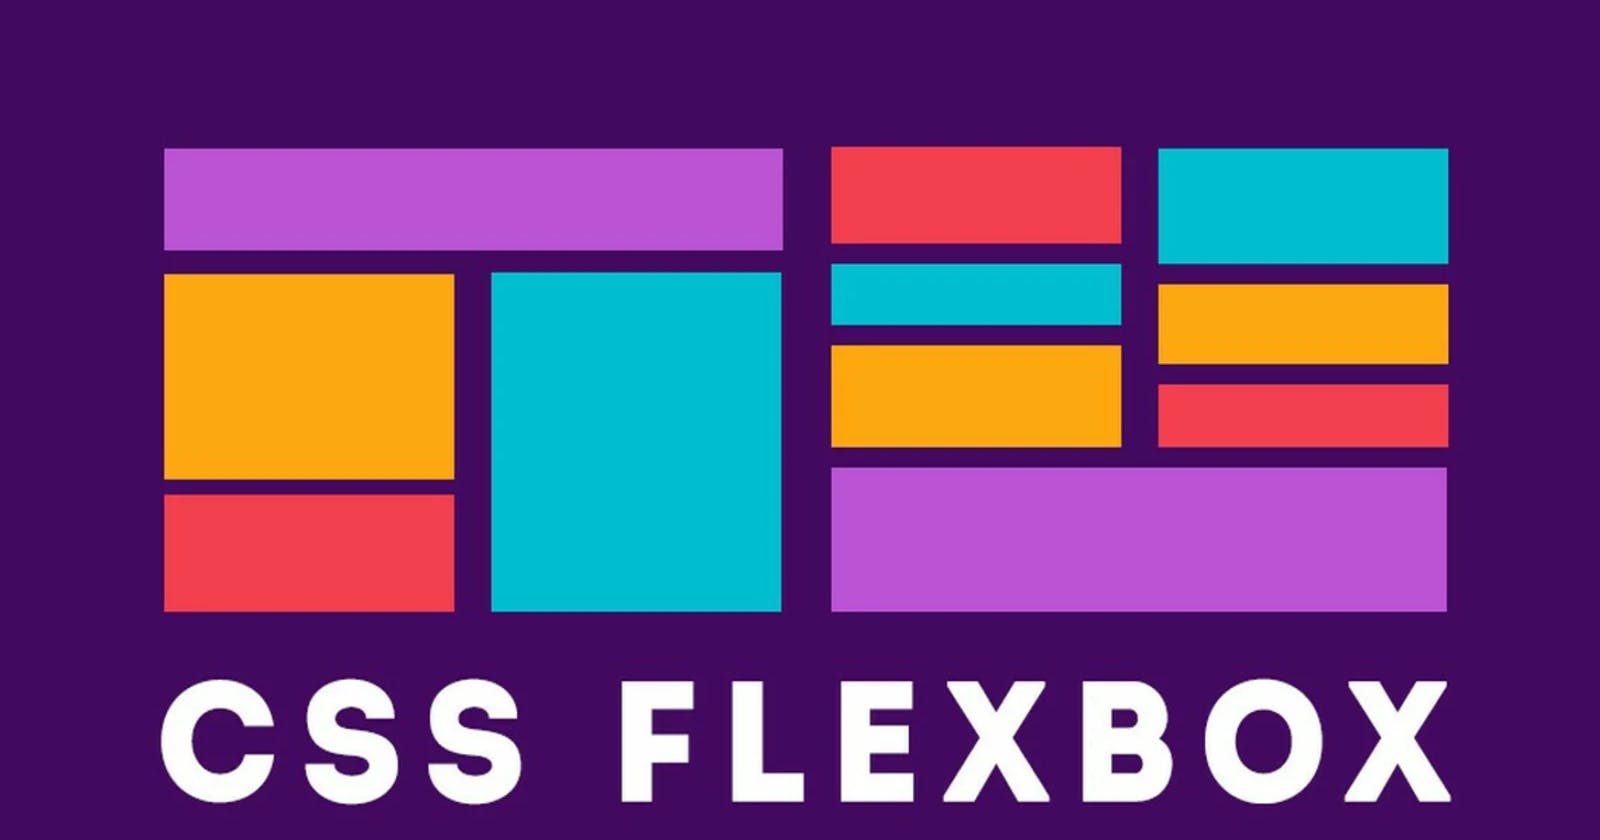 CSS flexbox: learn it now